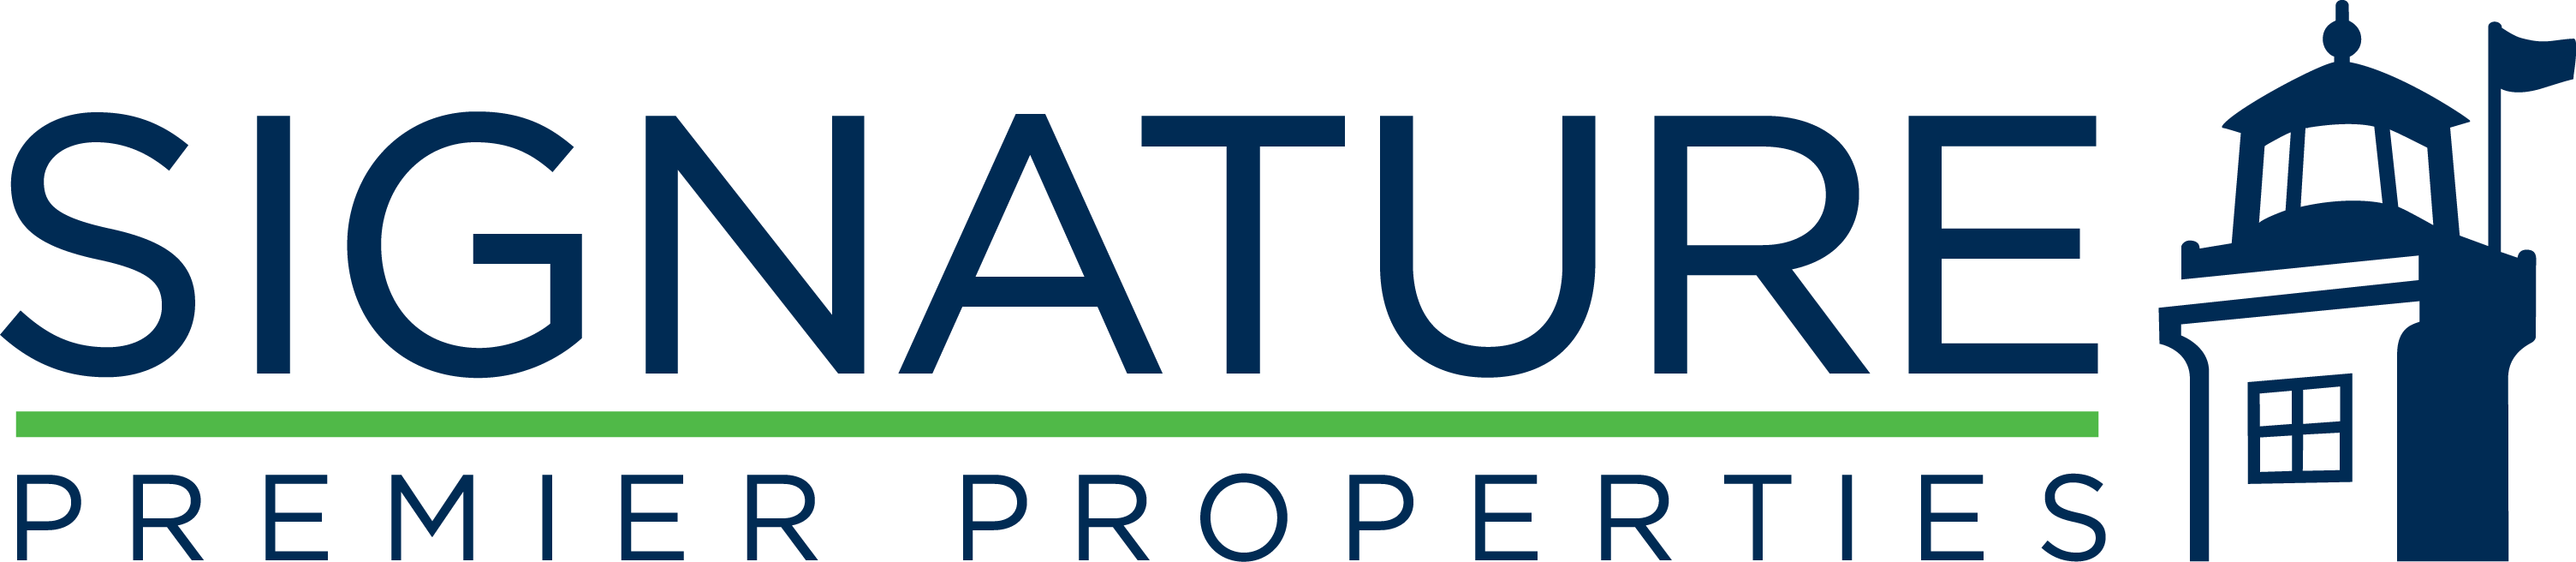 Signature Premier Properties logo